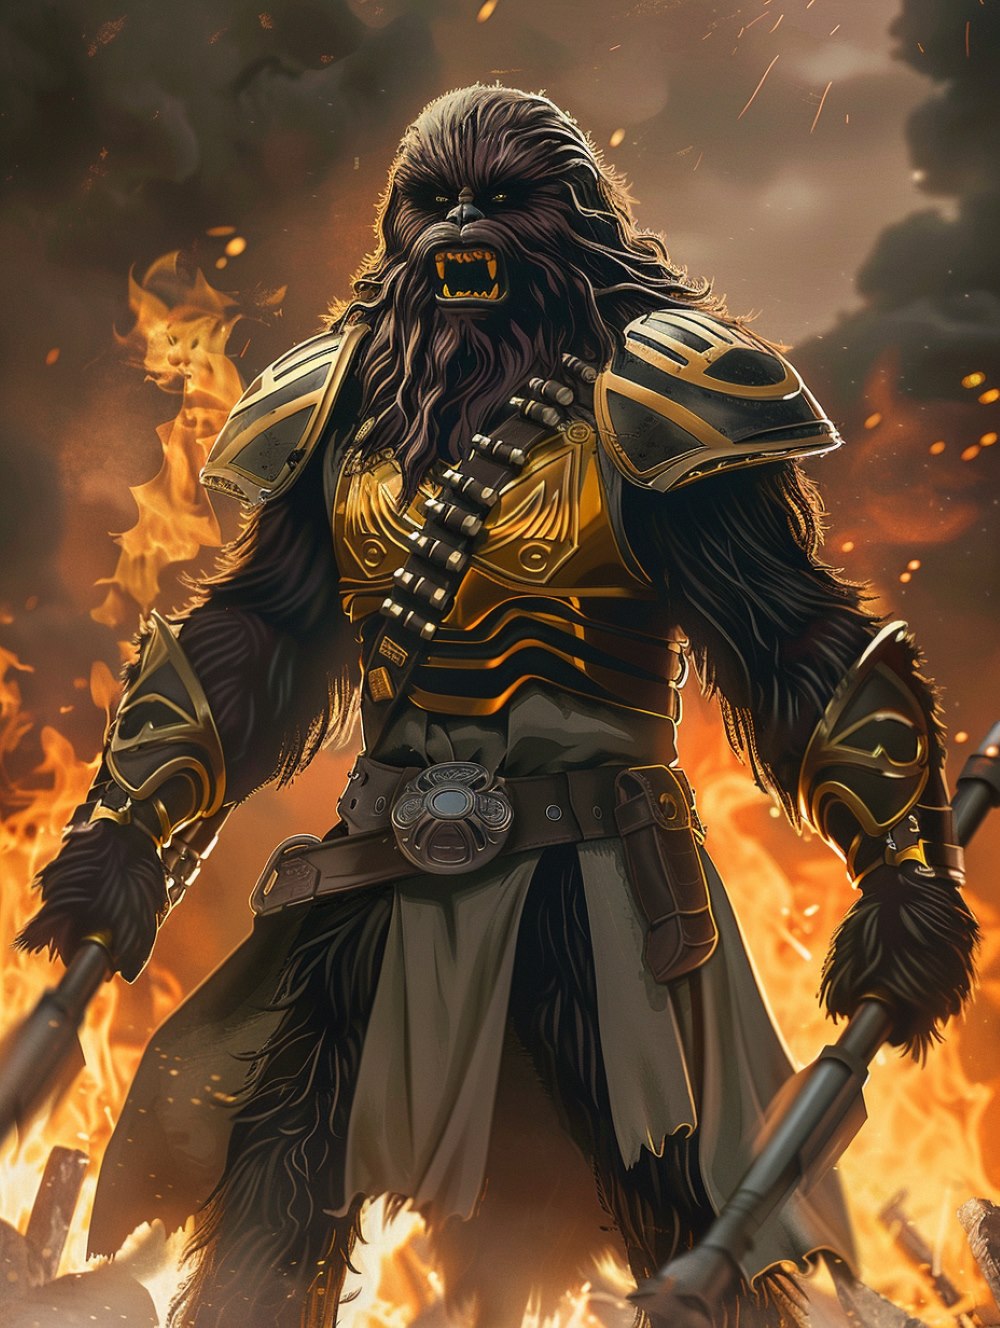 Black Krrsantan - a fierce gladiator